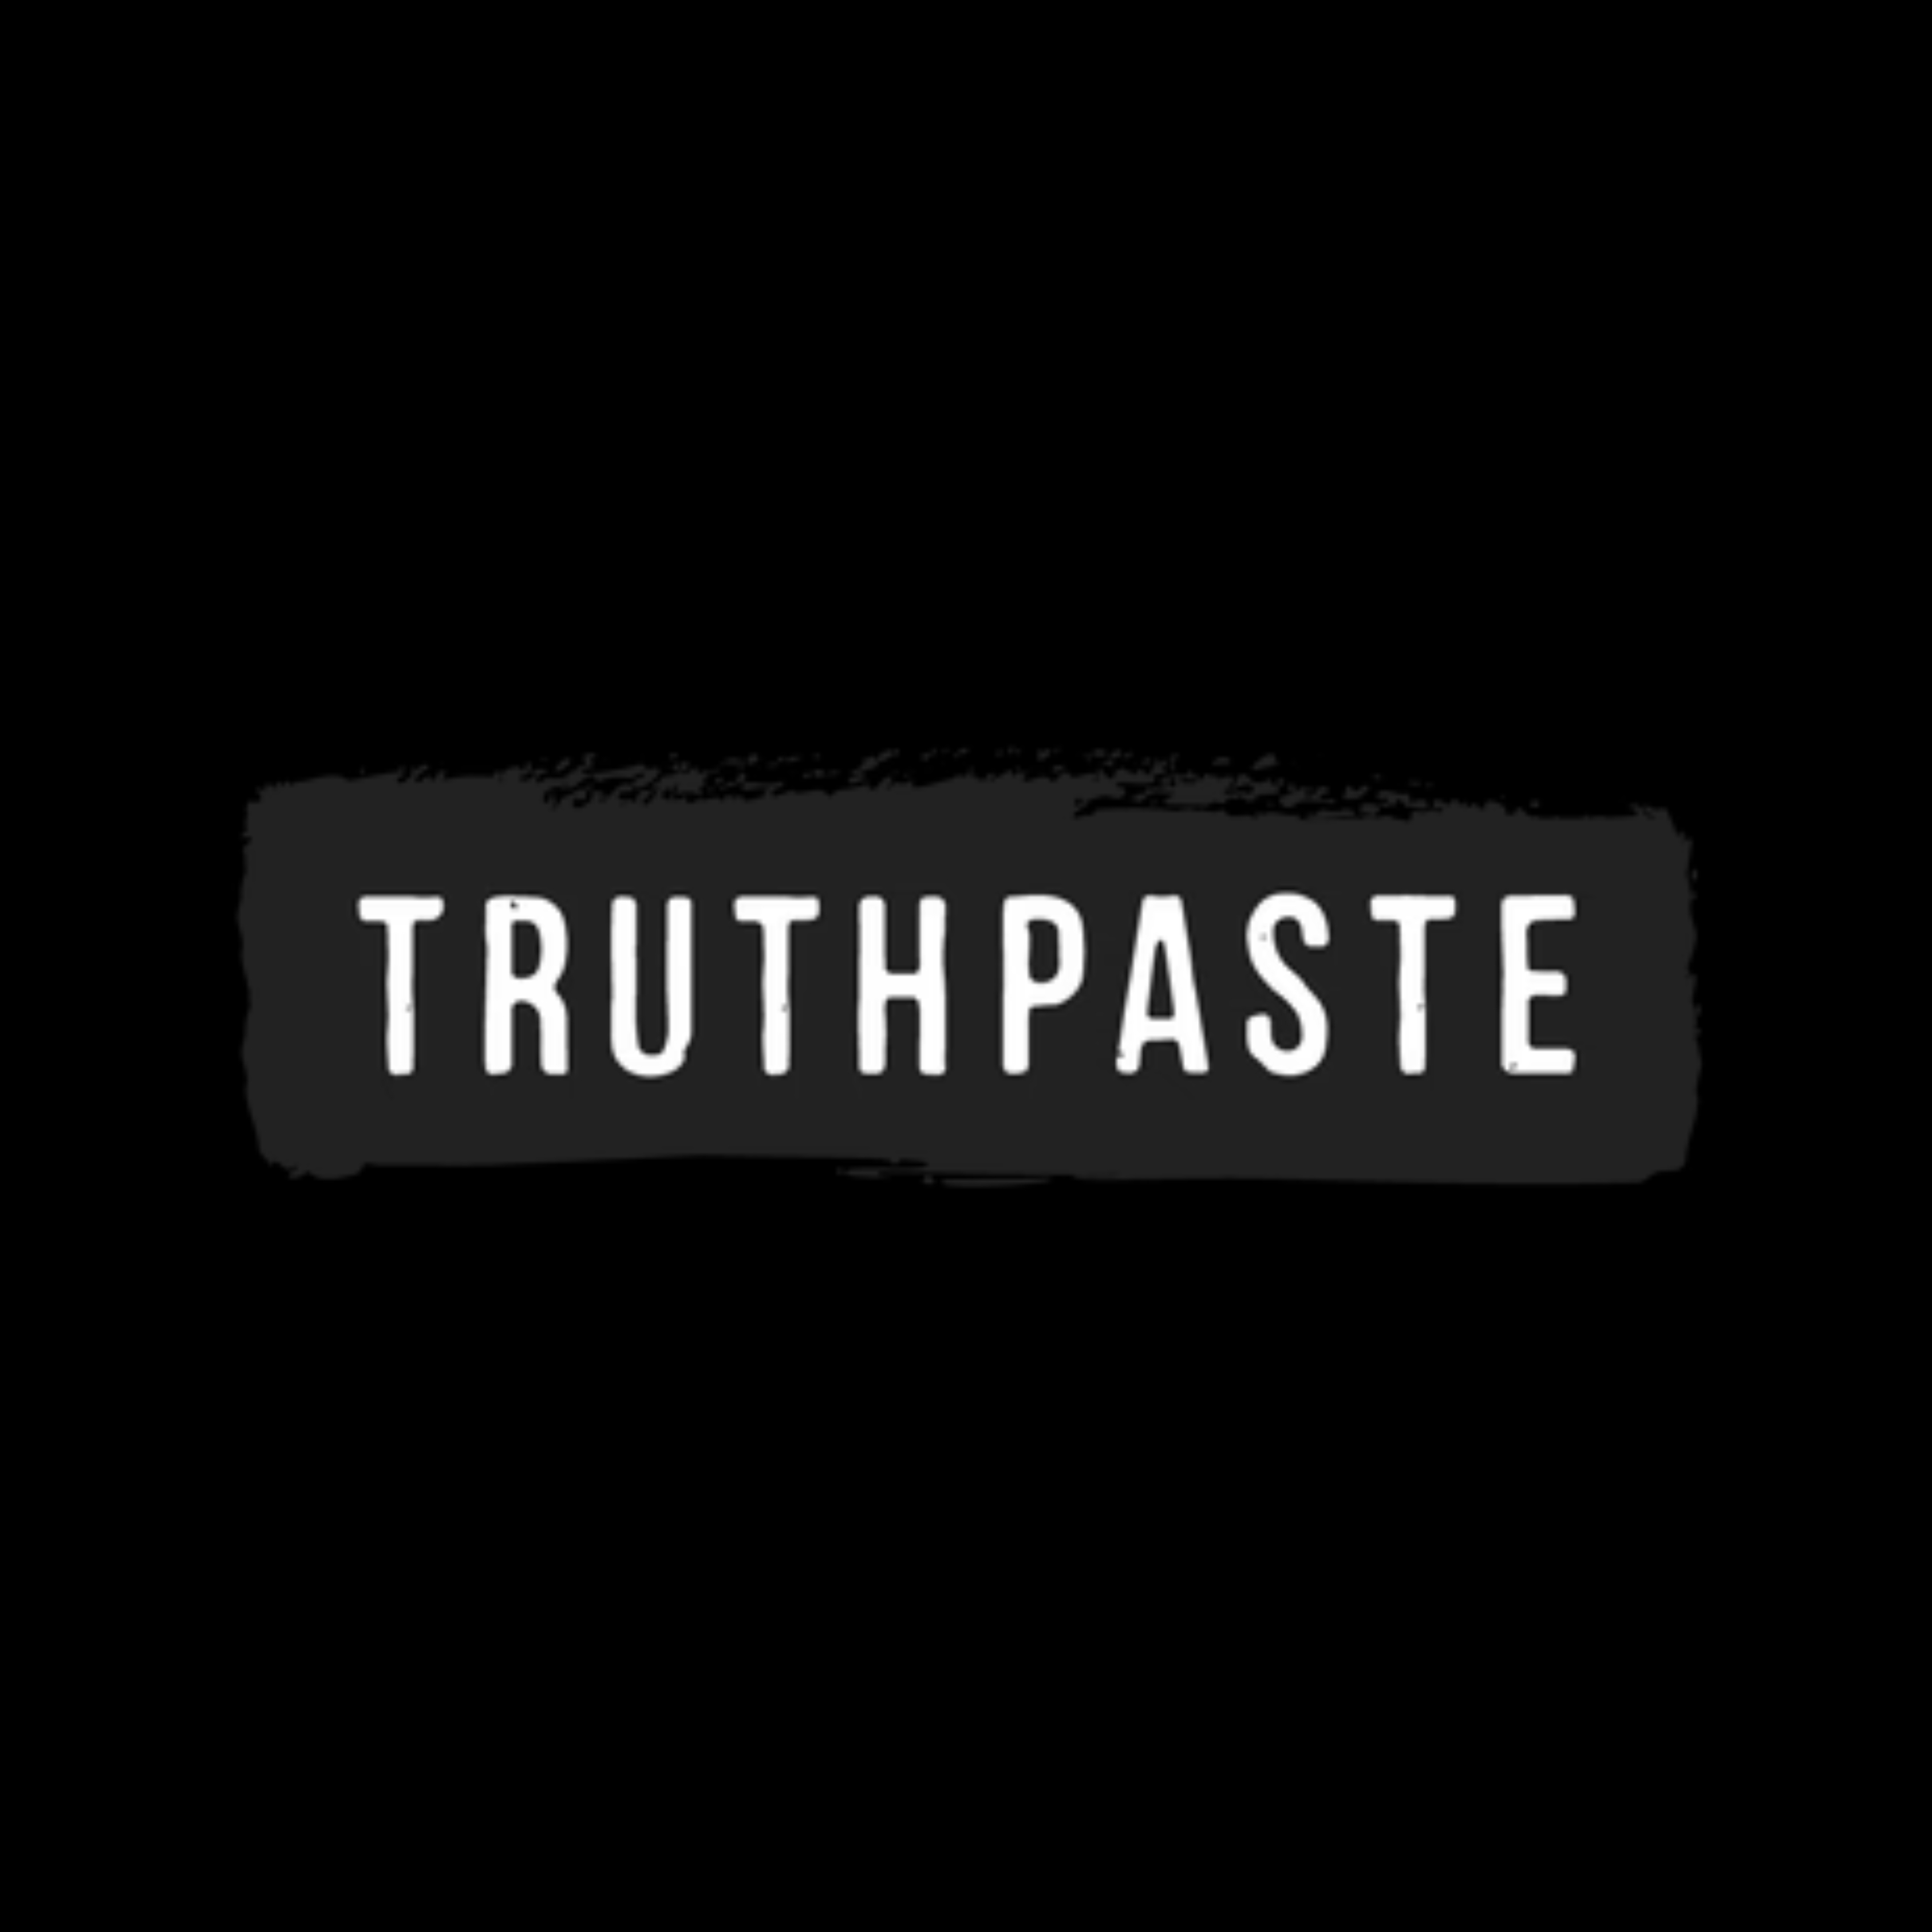 Truthpaste